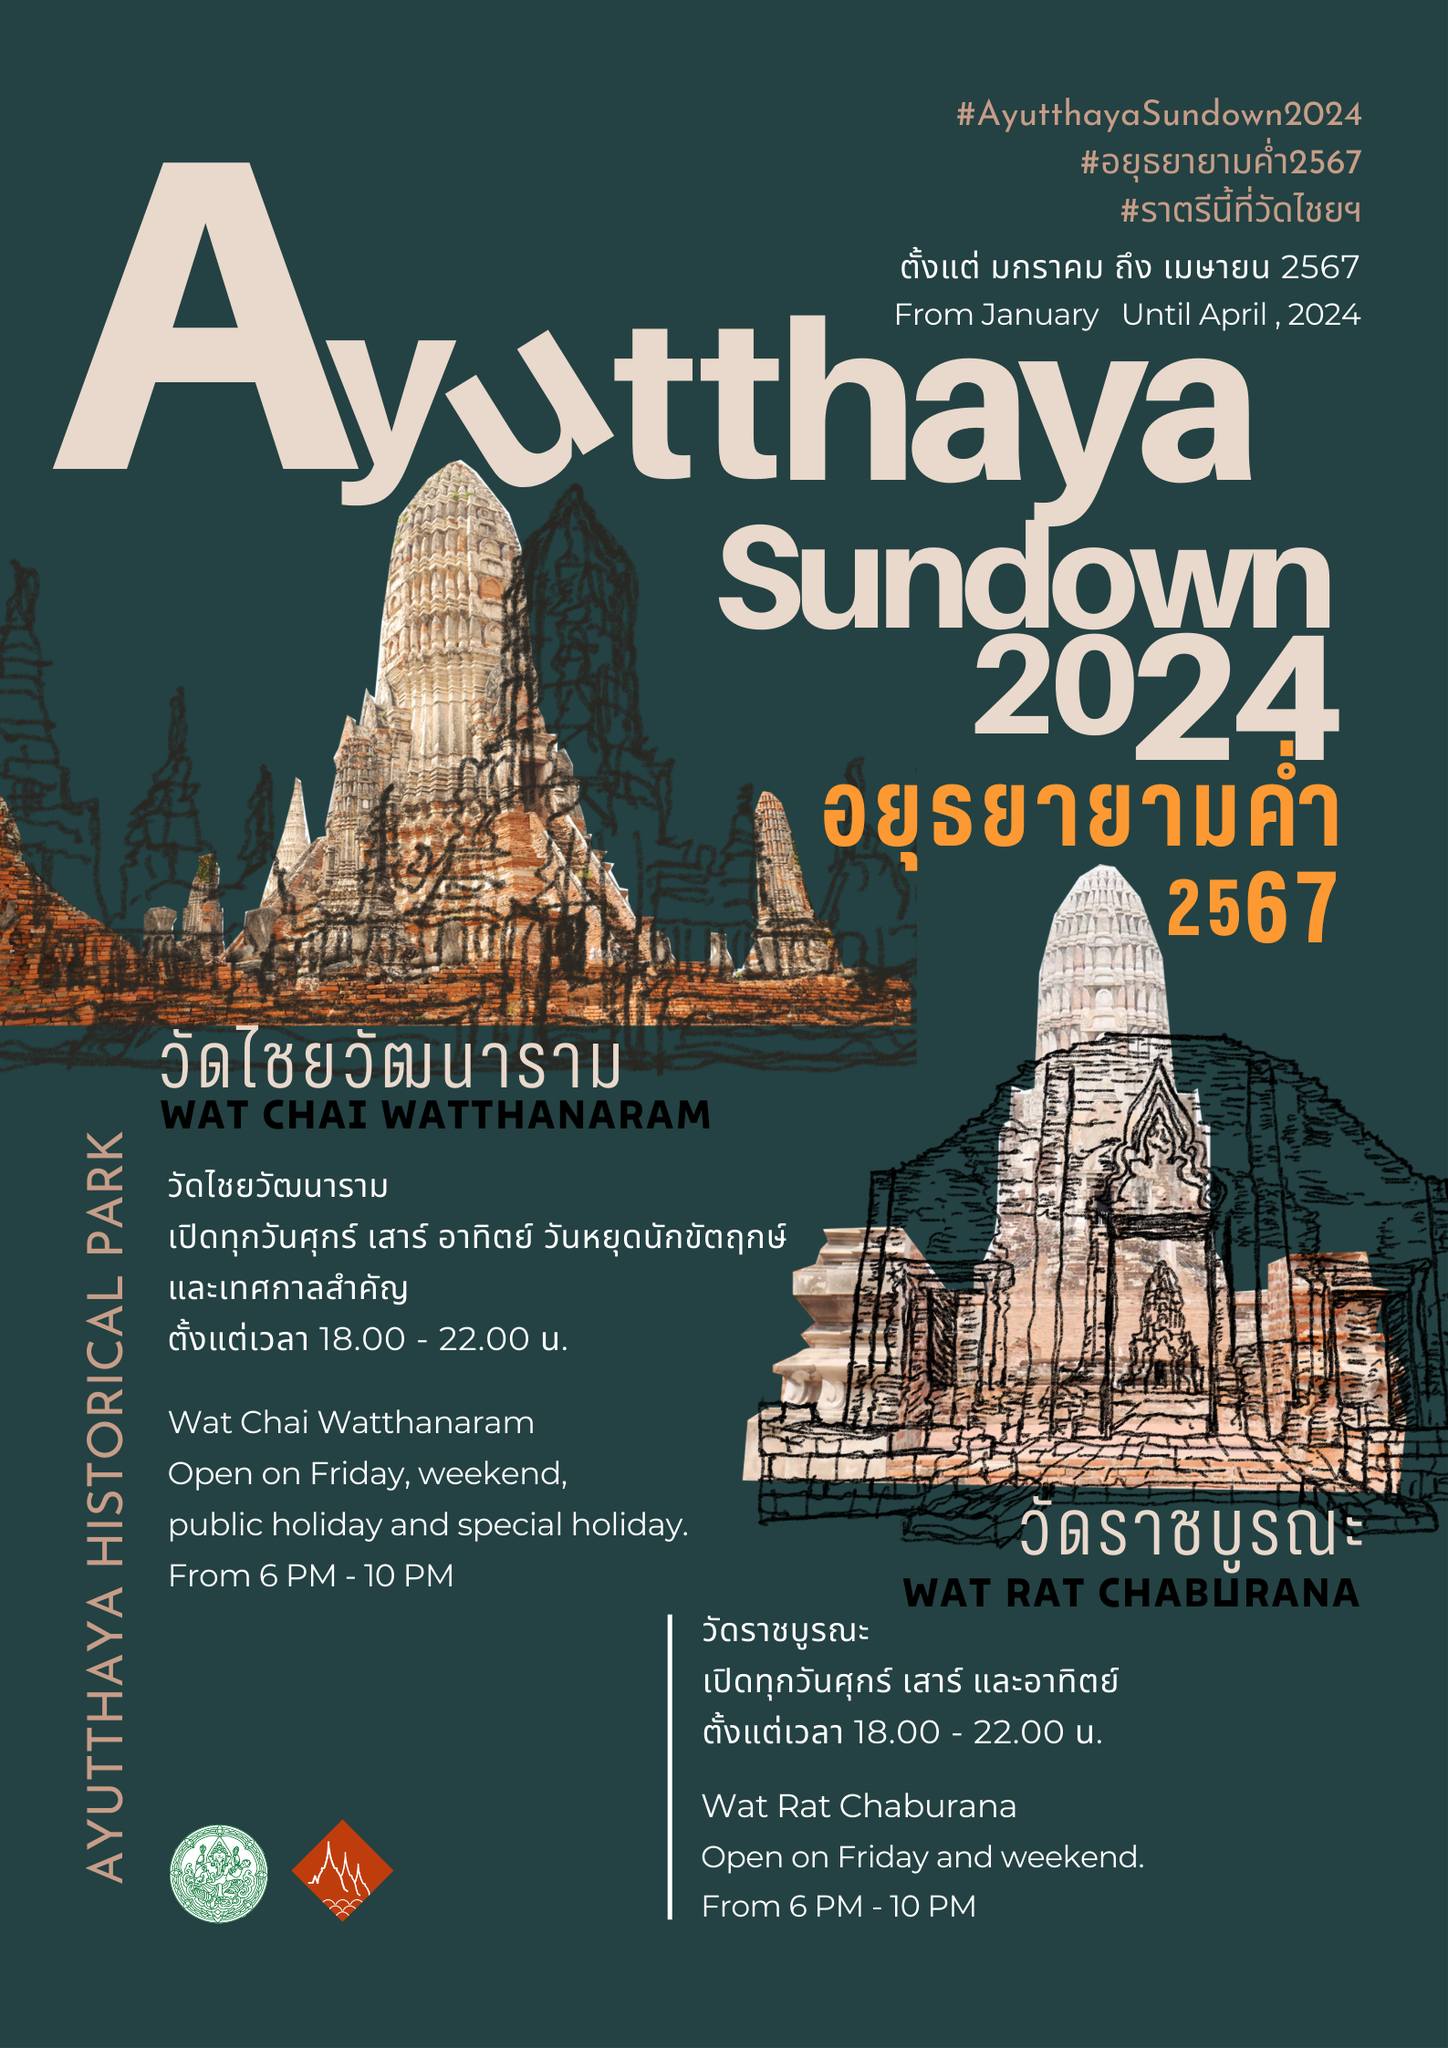 Ayutthaya Sundown 2024